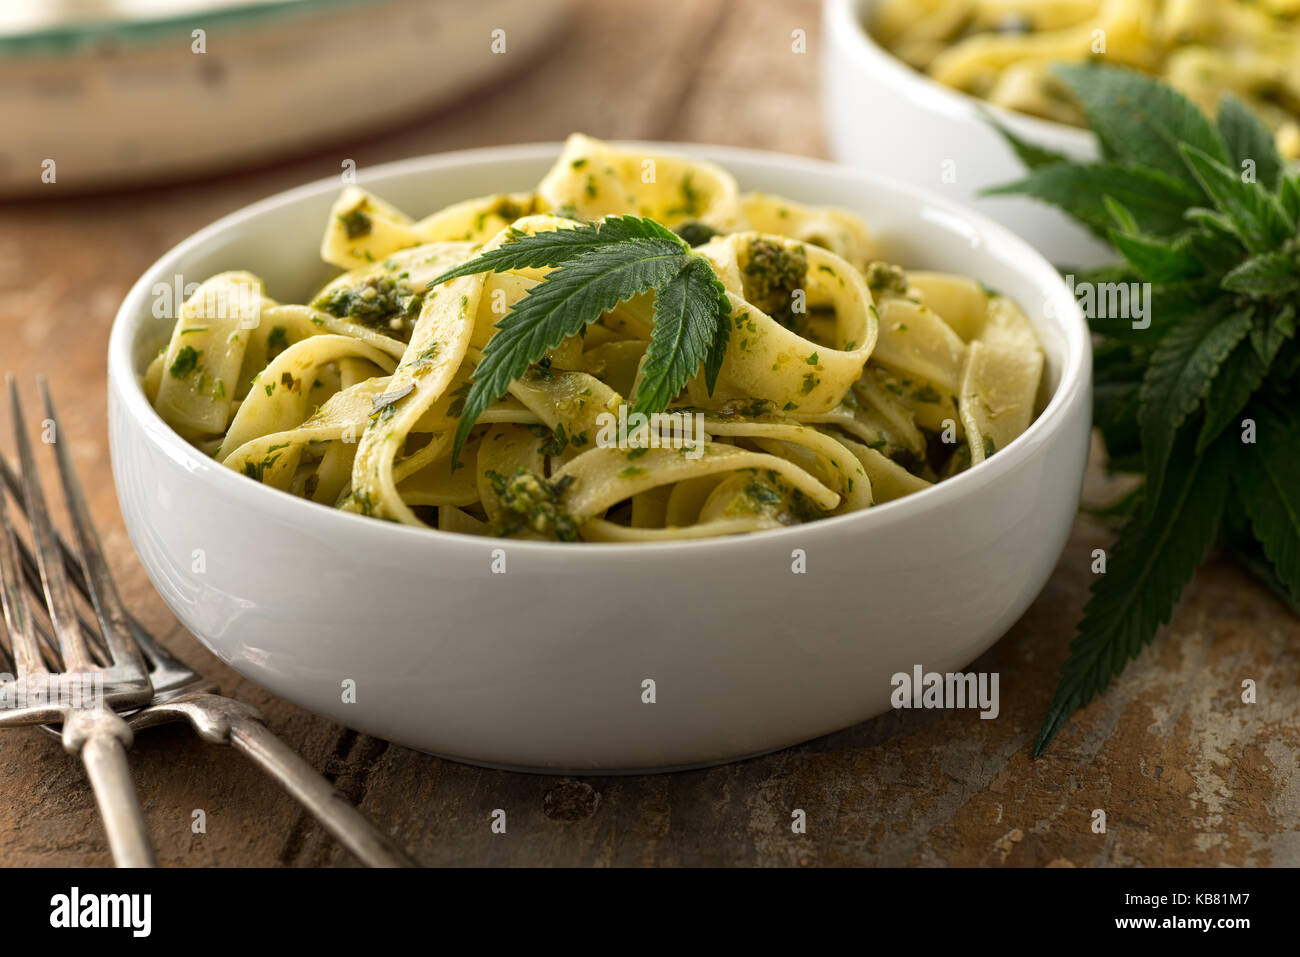 A bowl of delicious pasta with homemade marijuana pesto. Stock Photo